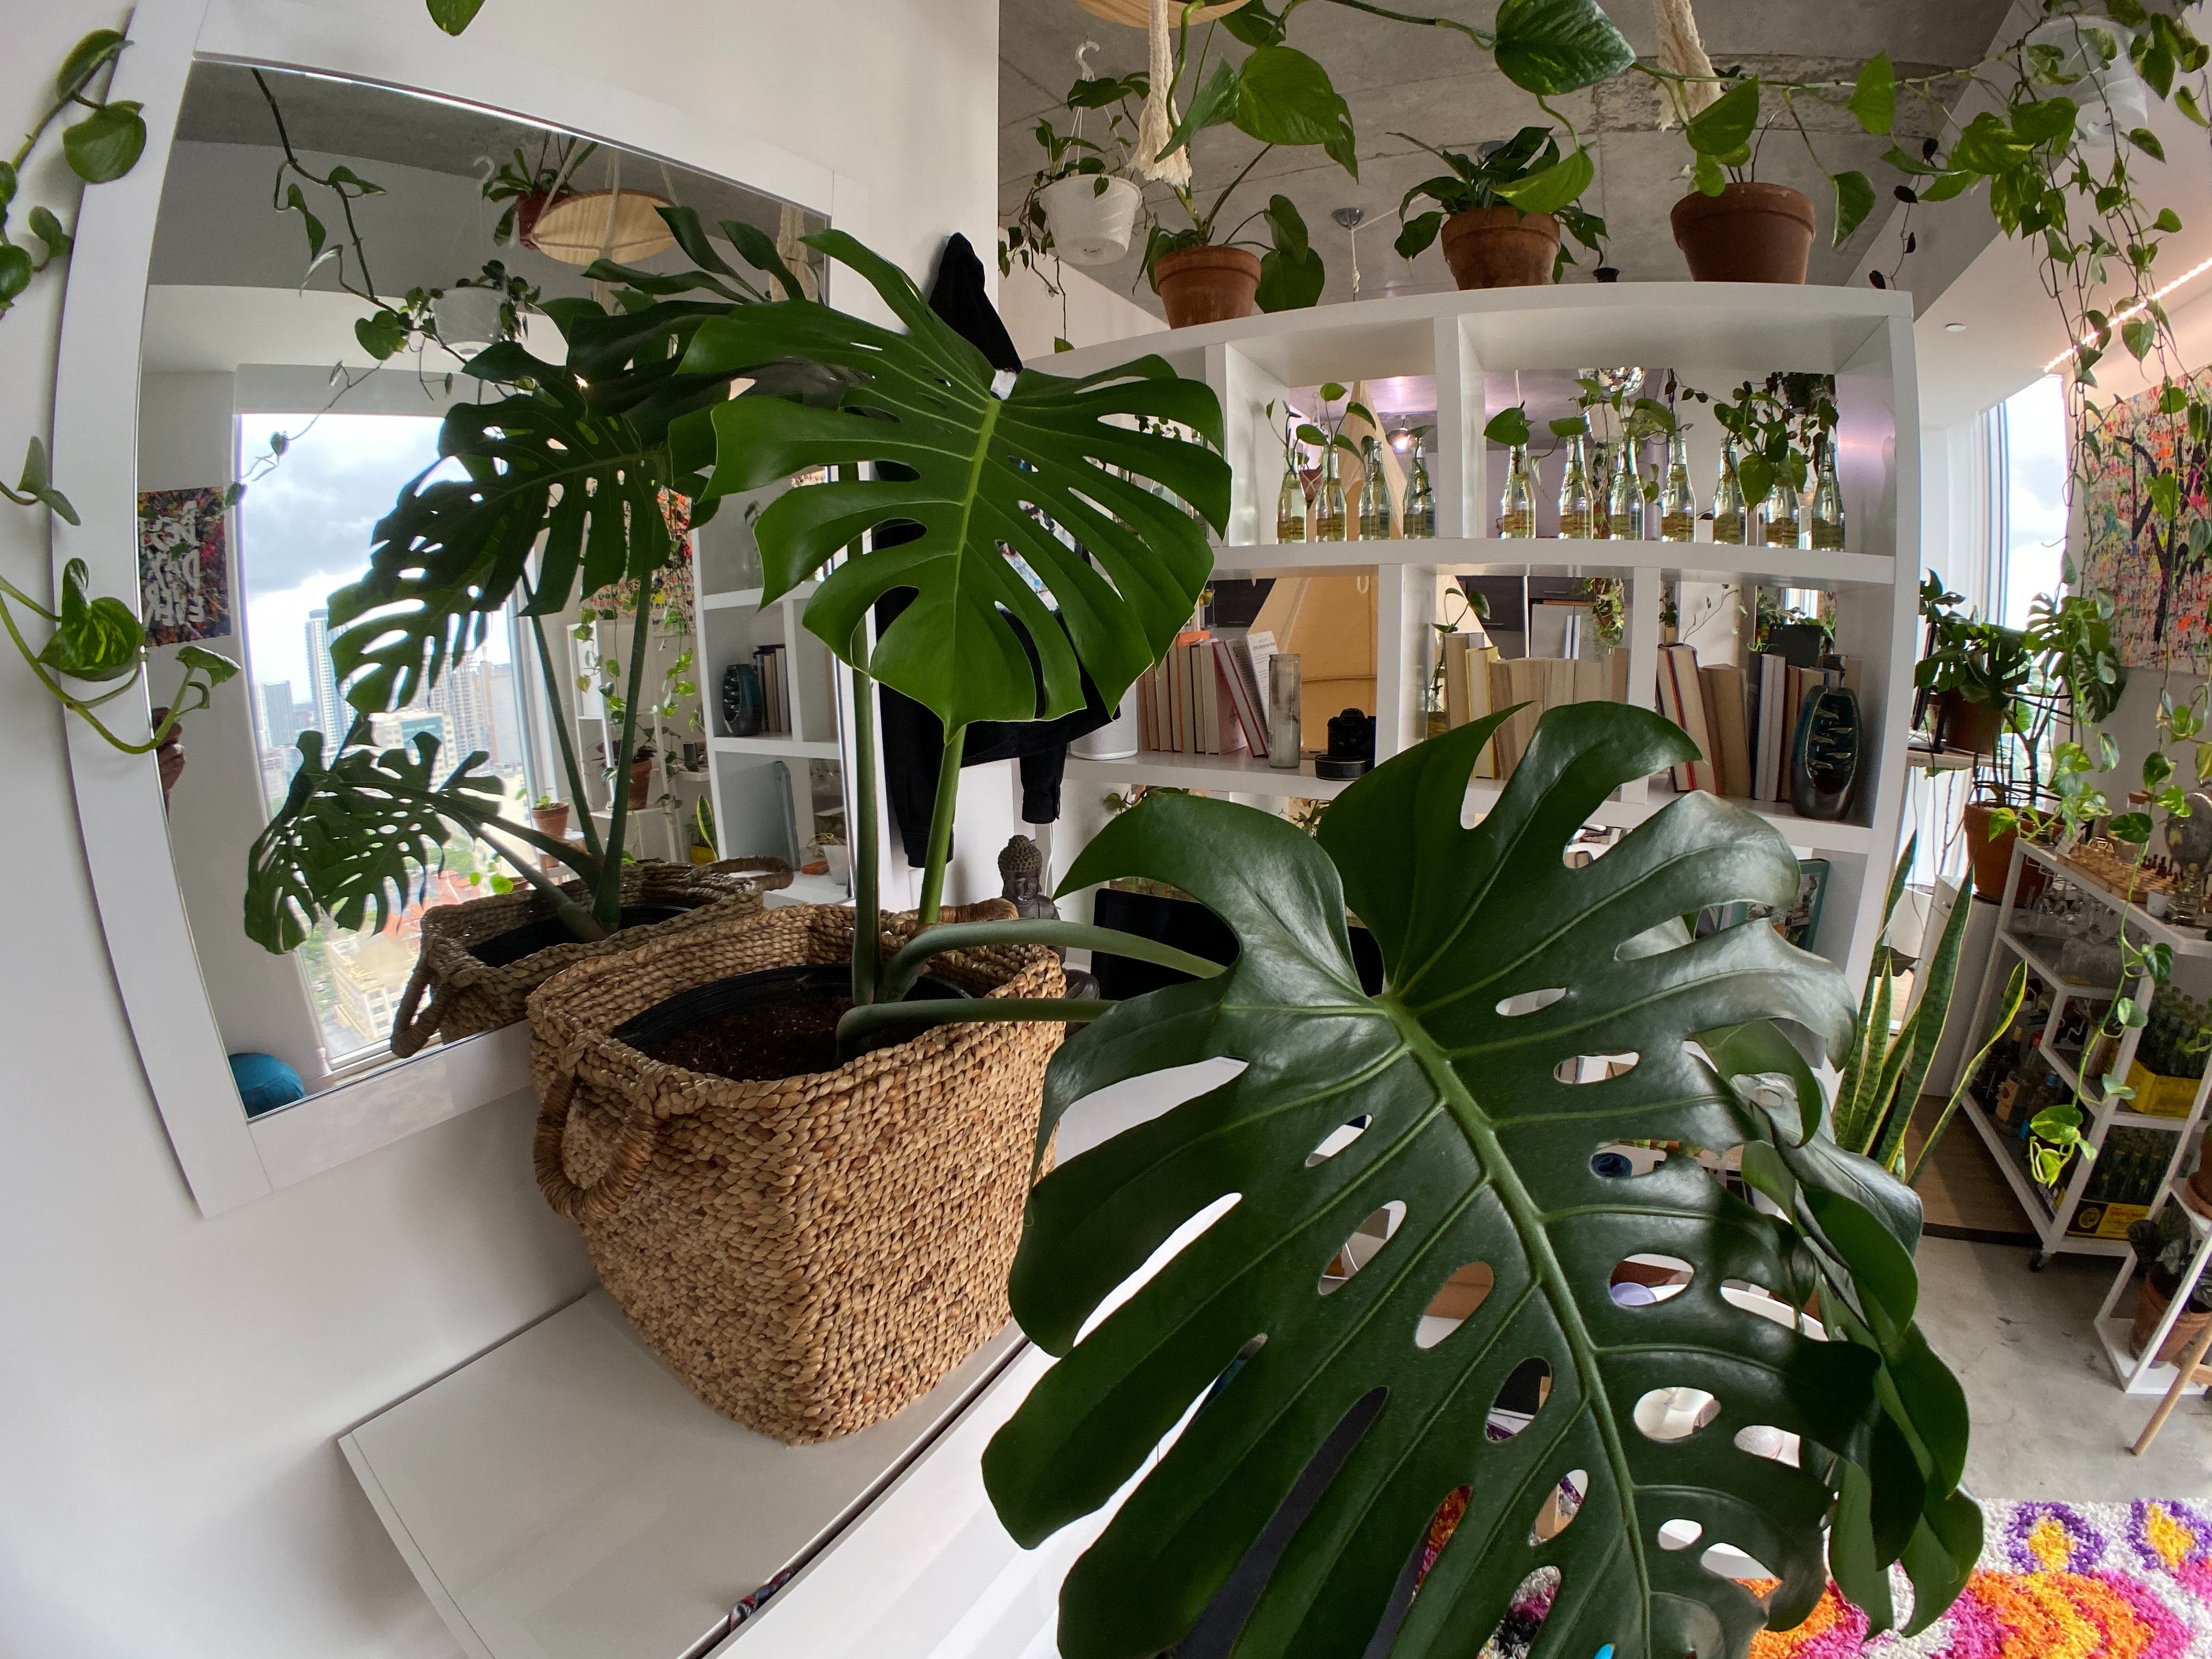 How to Grow Your Indoor Plants